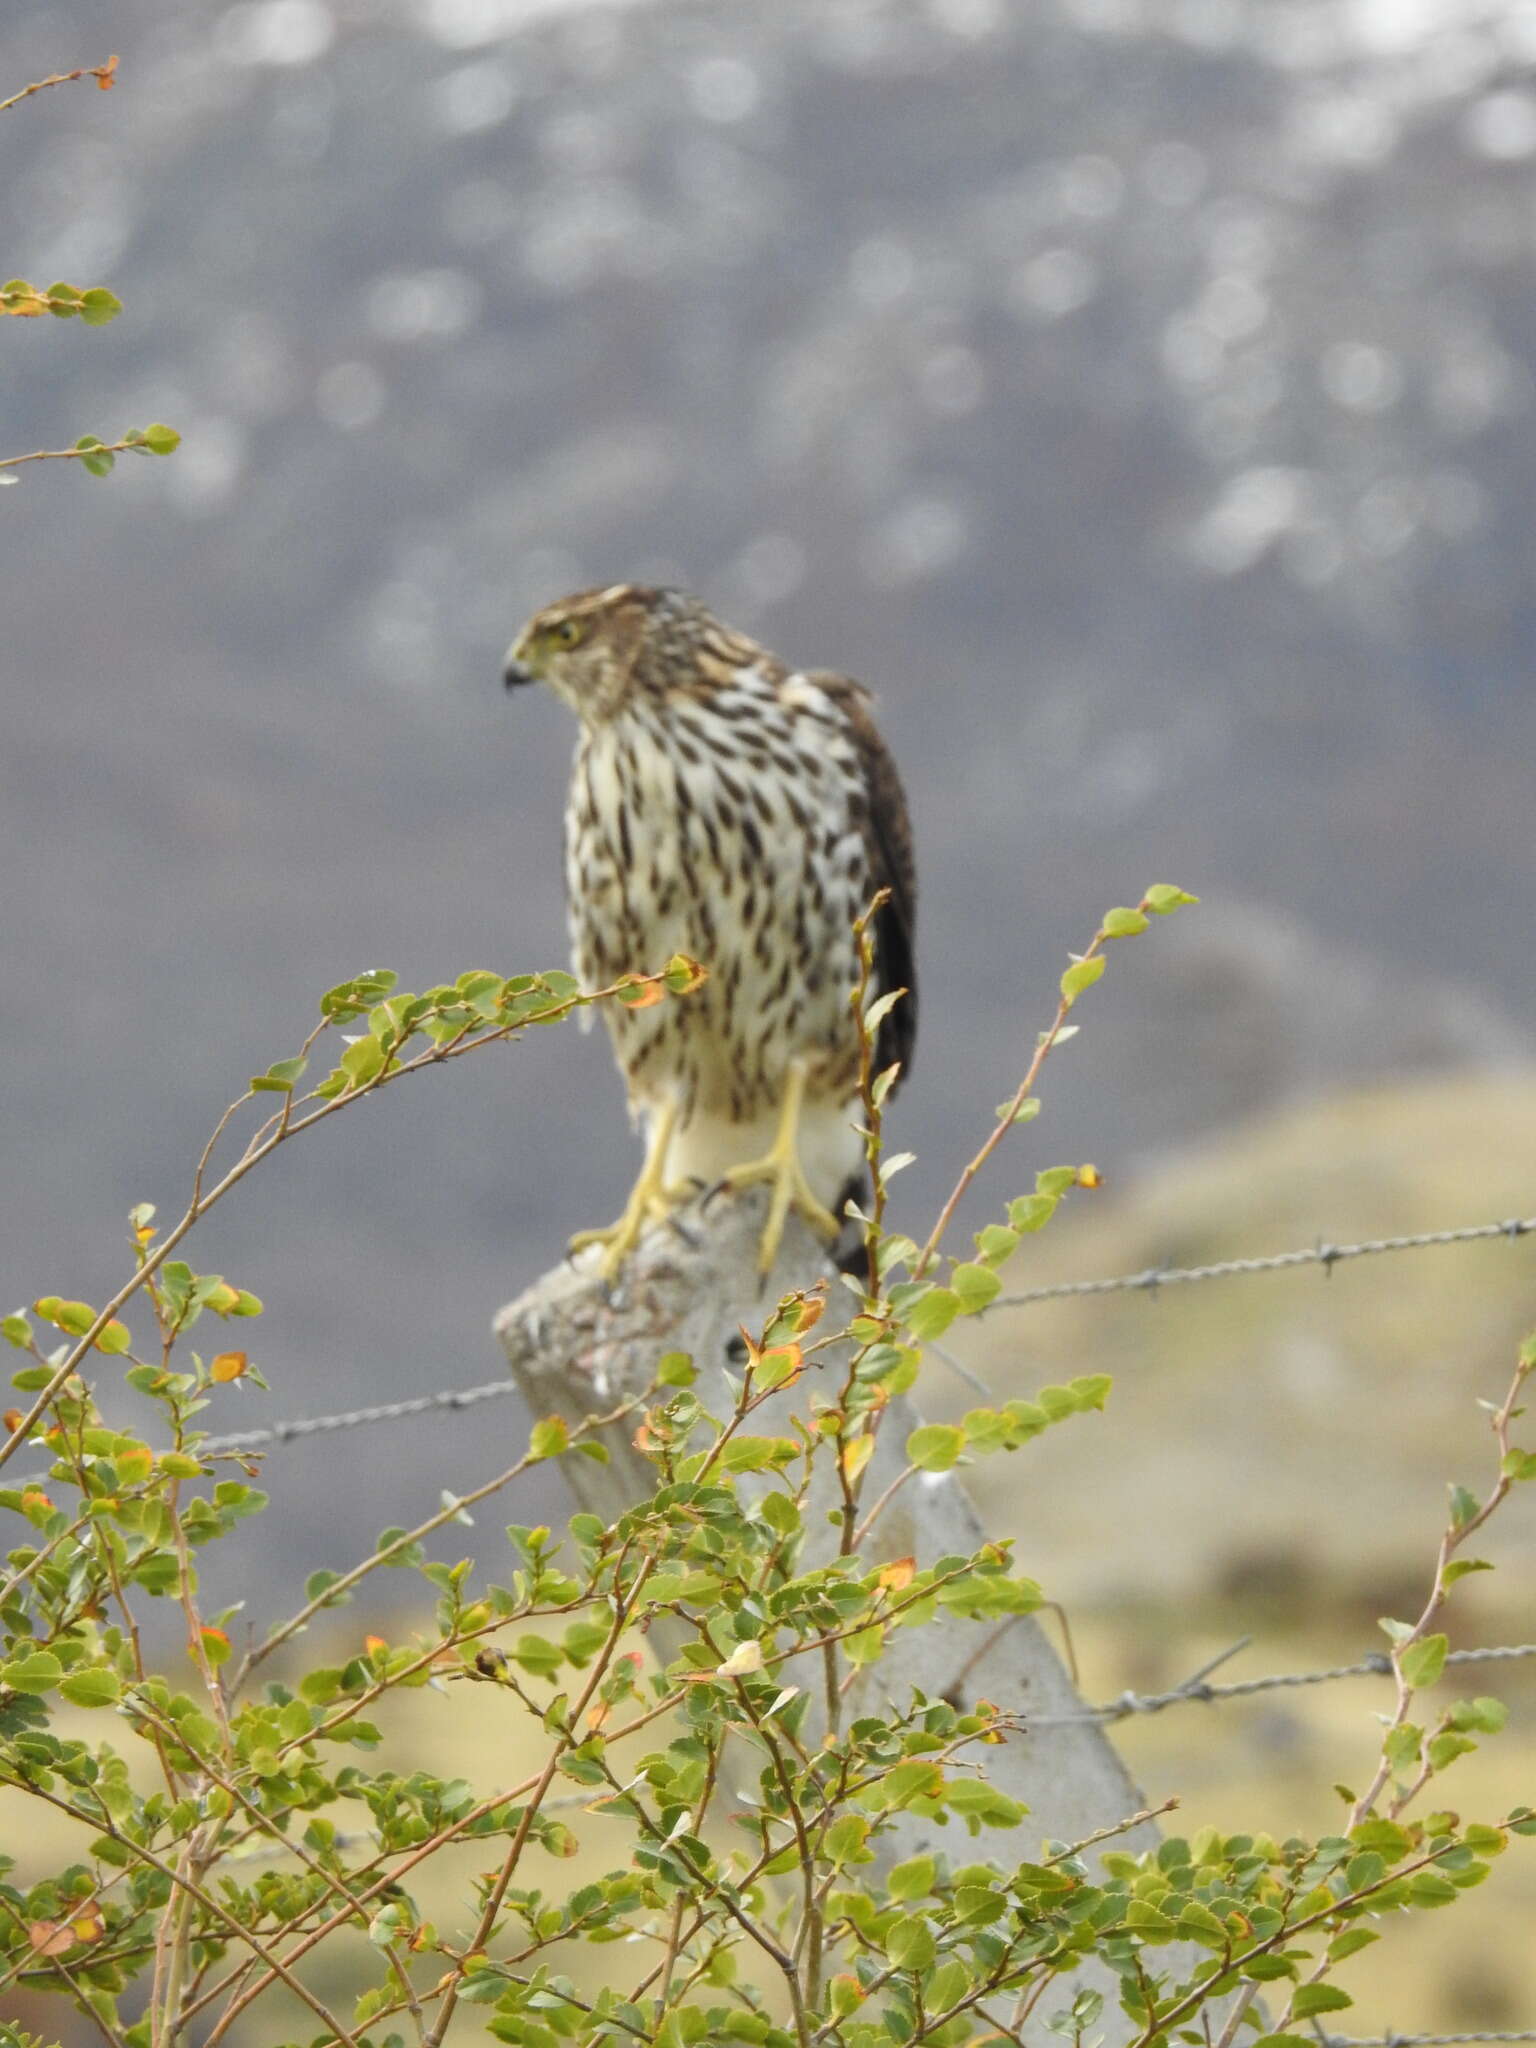 Image of Chilean Hawk